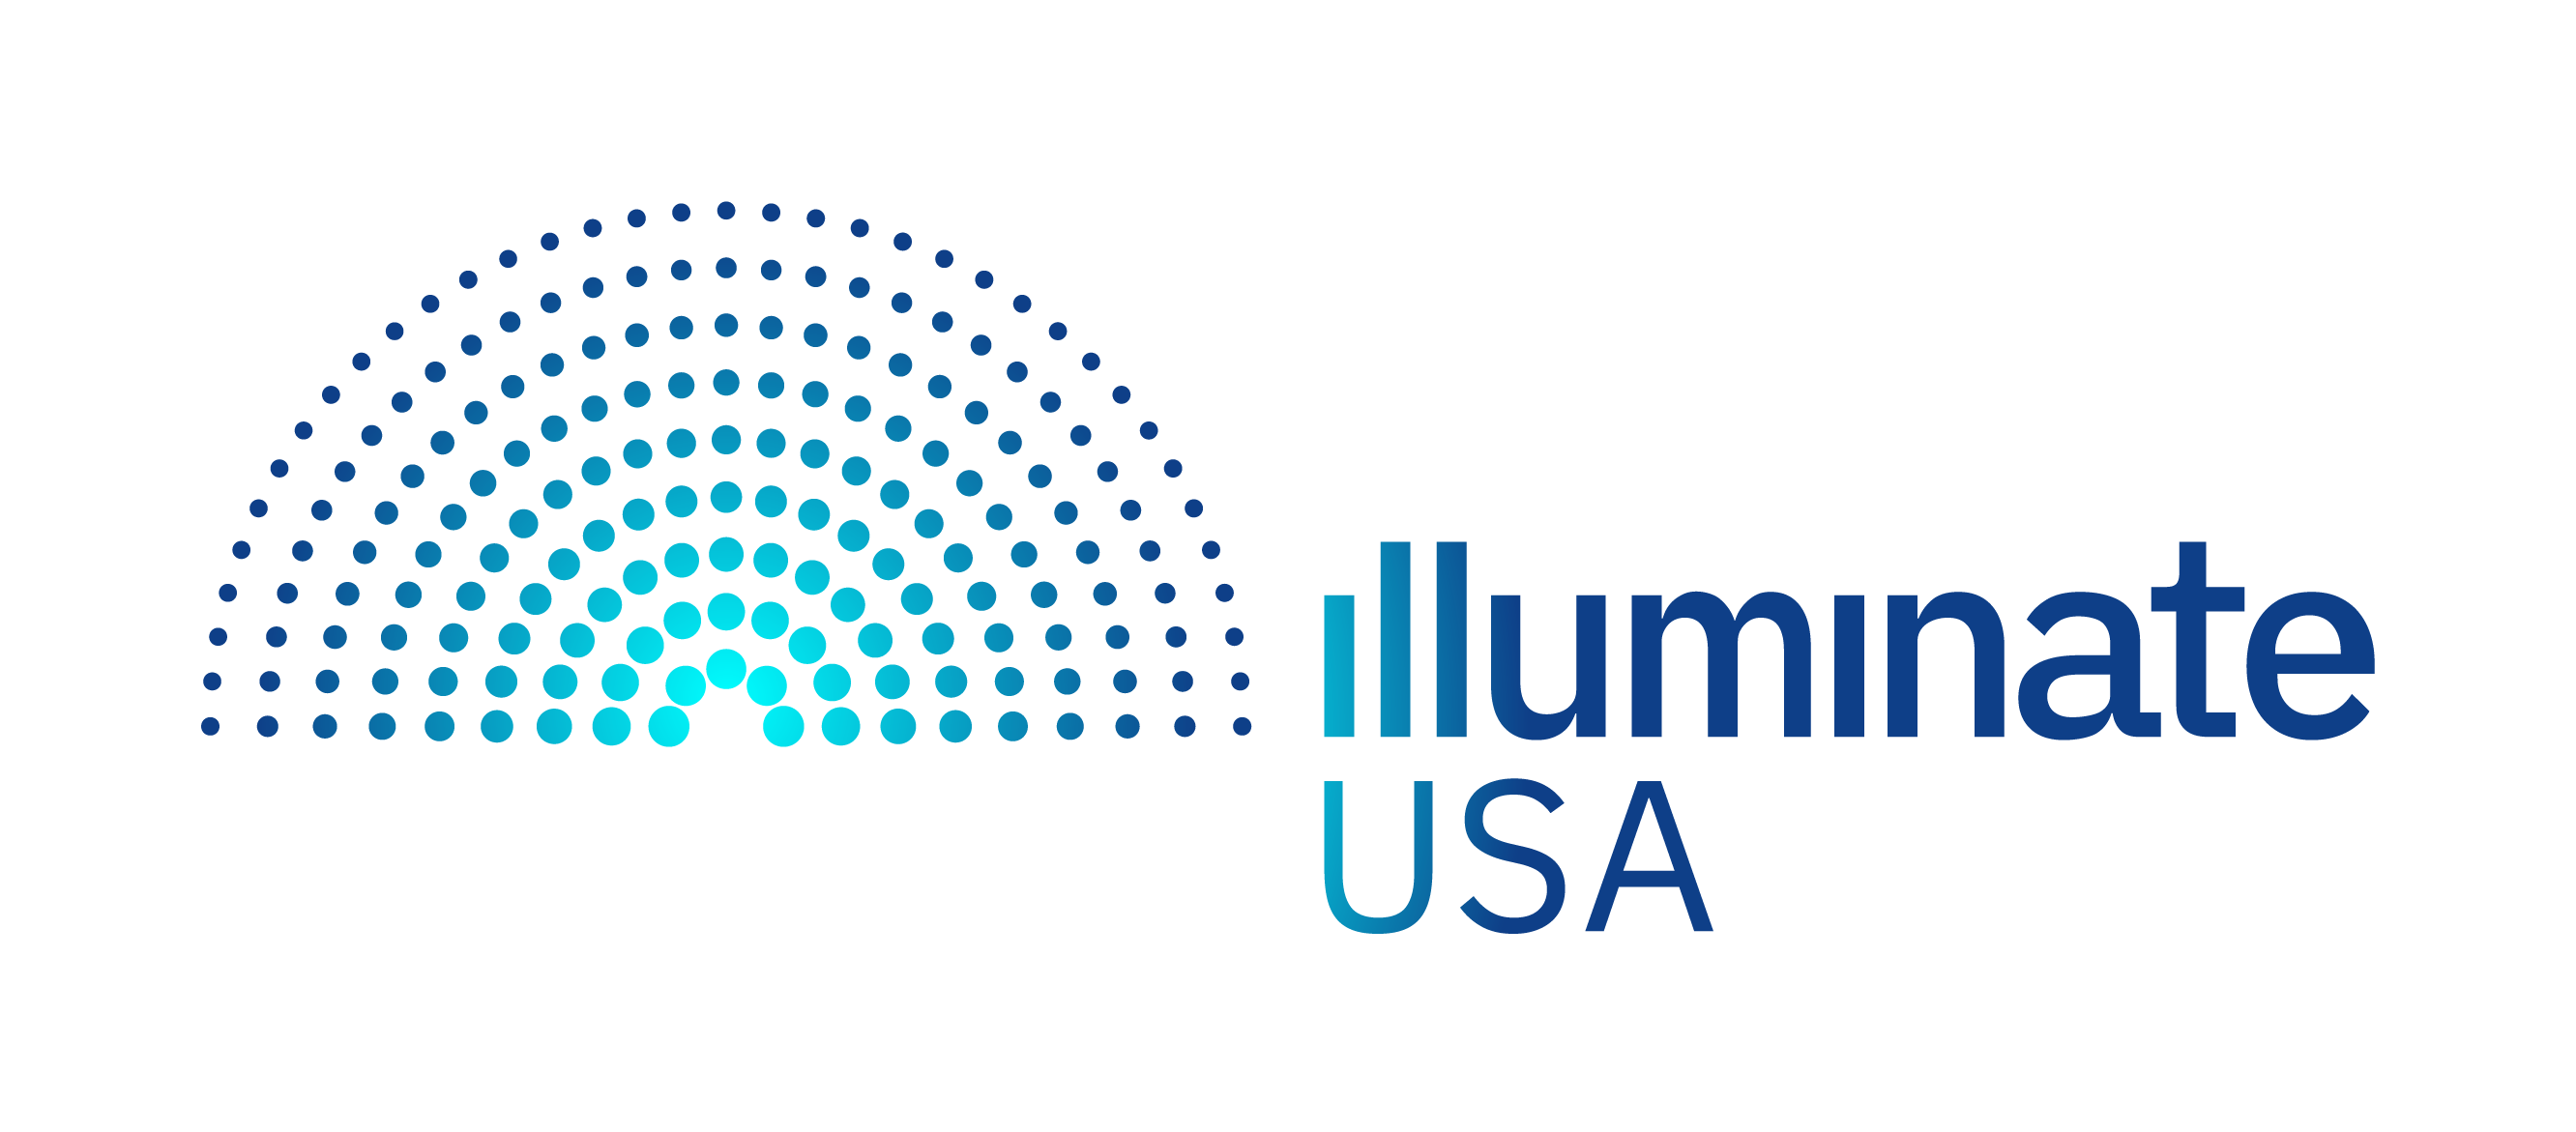 Illuminate_USA no background